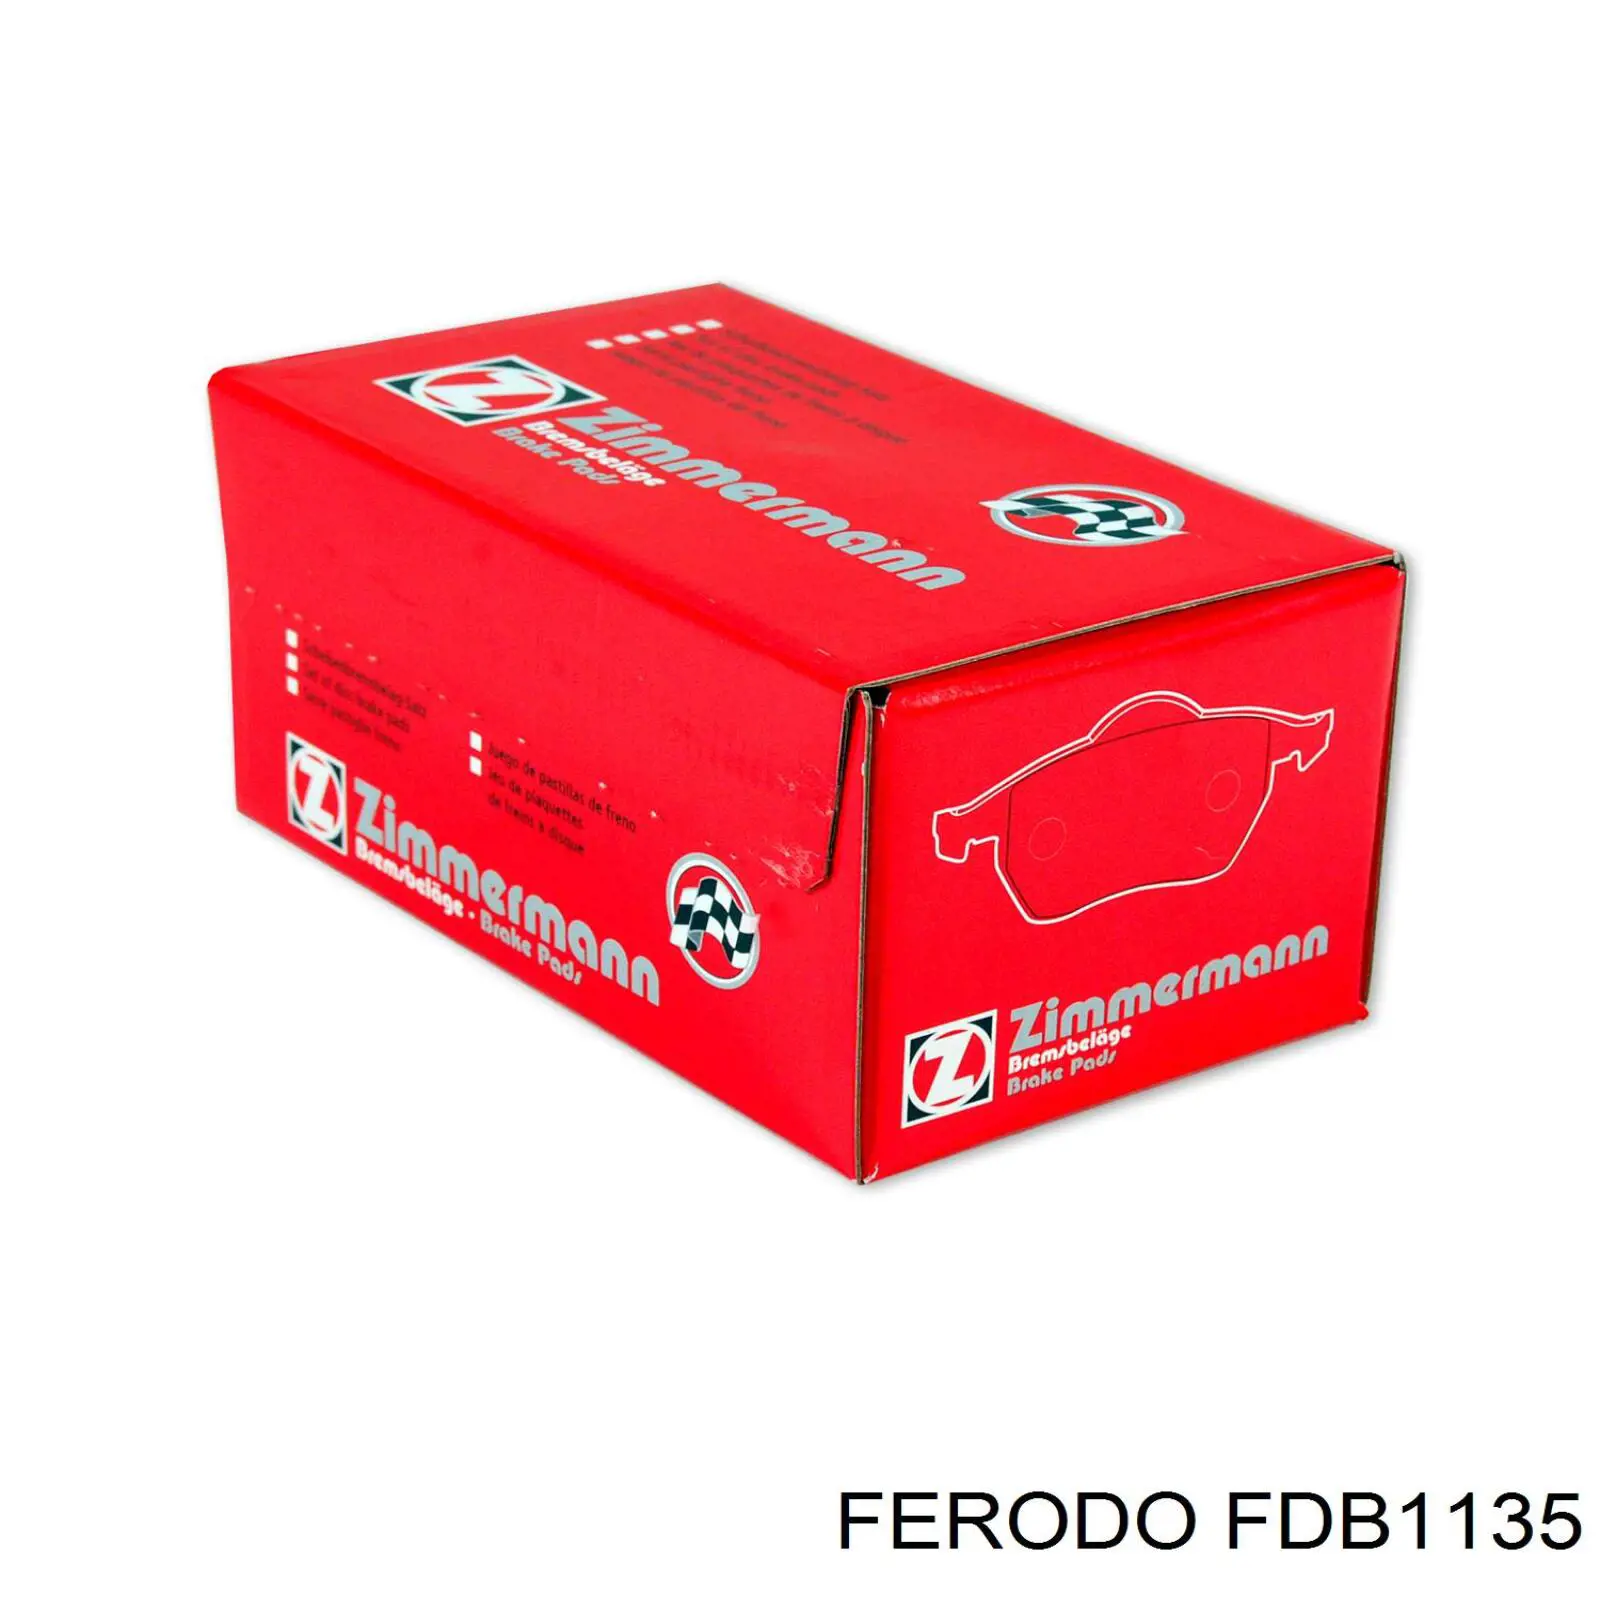 FDB1135 Ferodo pastillas de freno delanteras